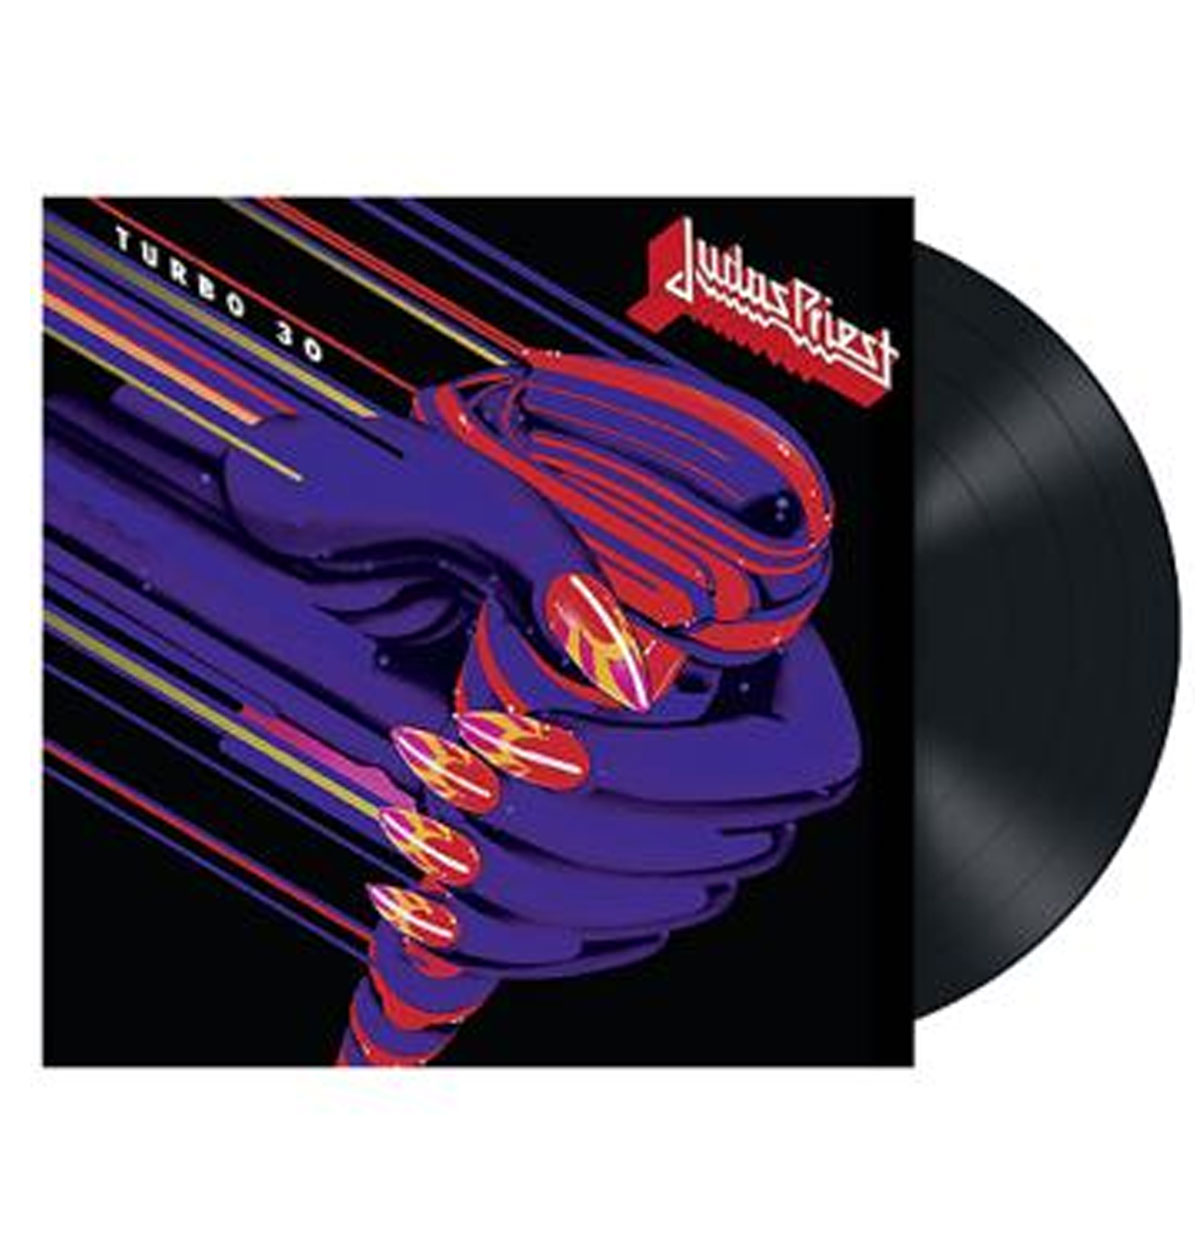 Judas Priest - Turbo 30 (30th anniversary edition) LP